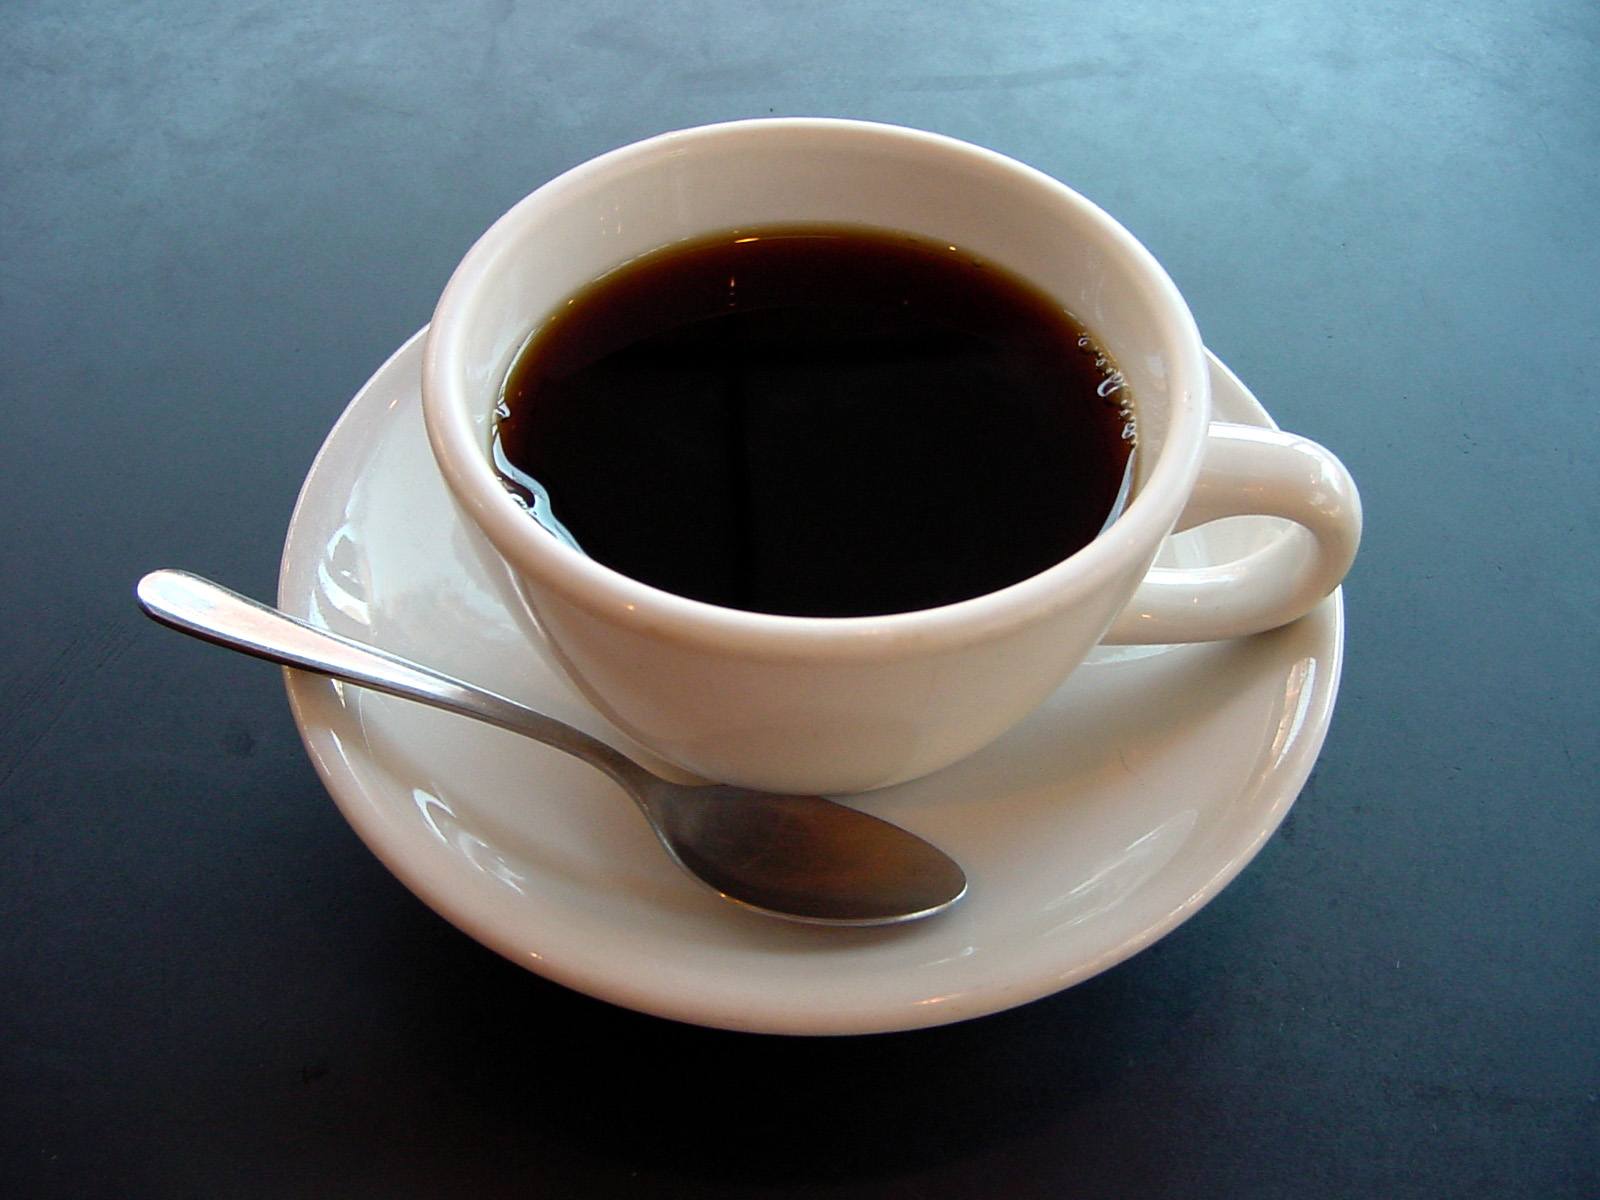 The easiest way to kick your caffeine habit